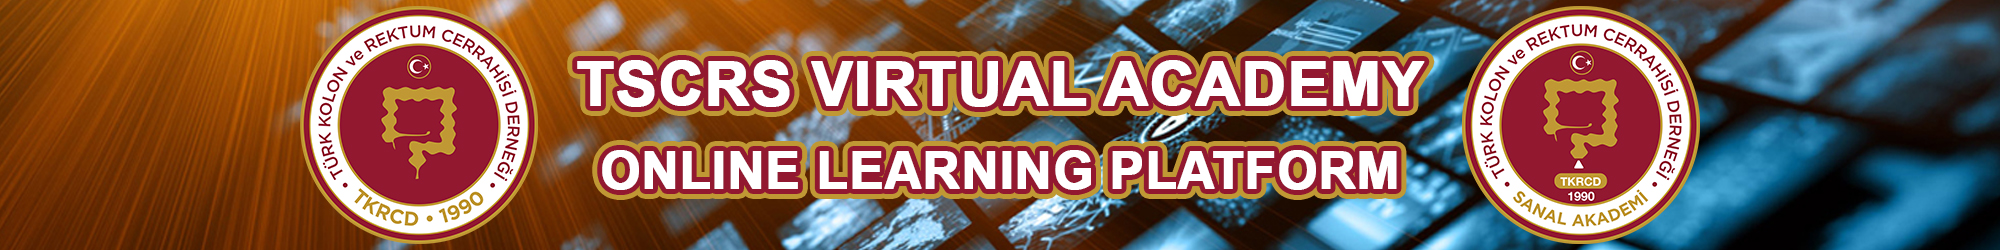 TSCRS Virtual Academy